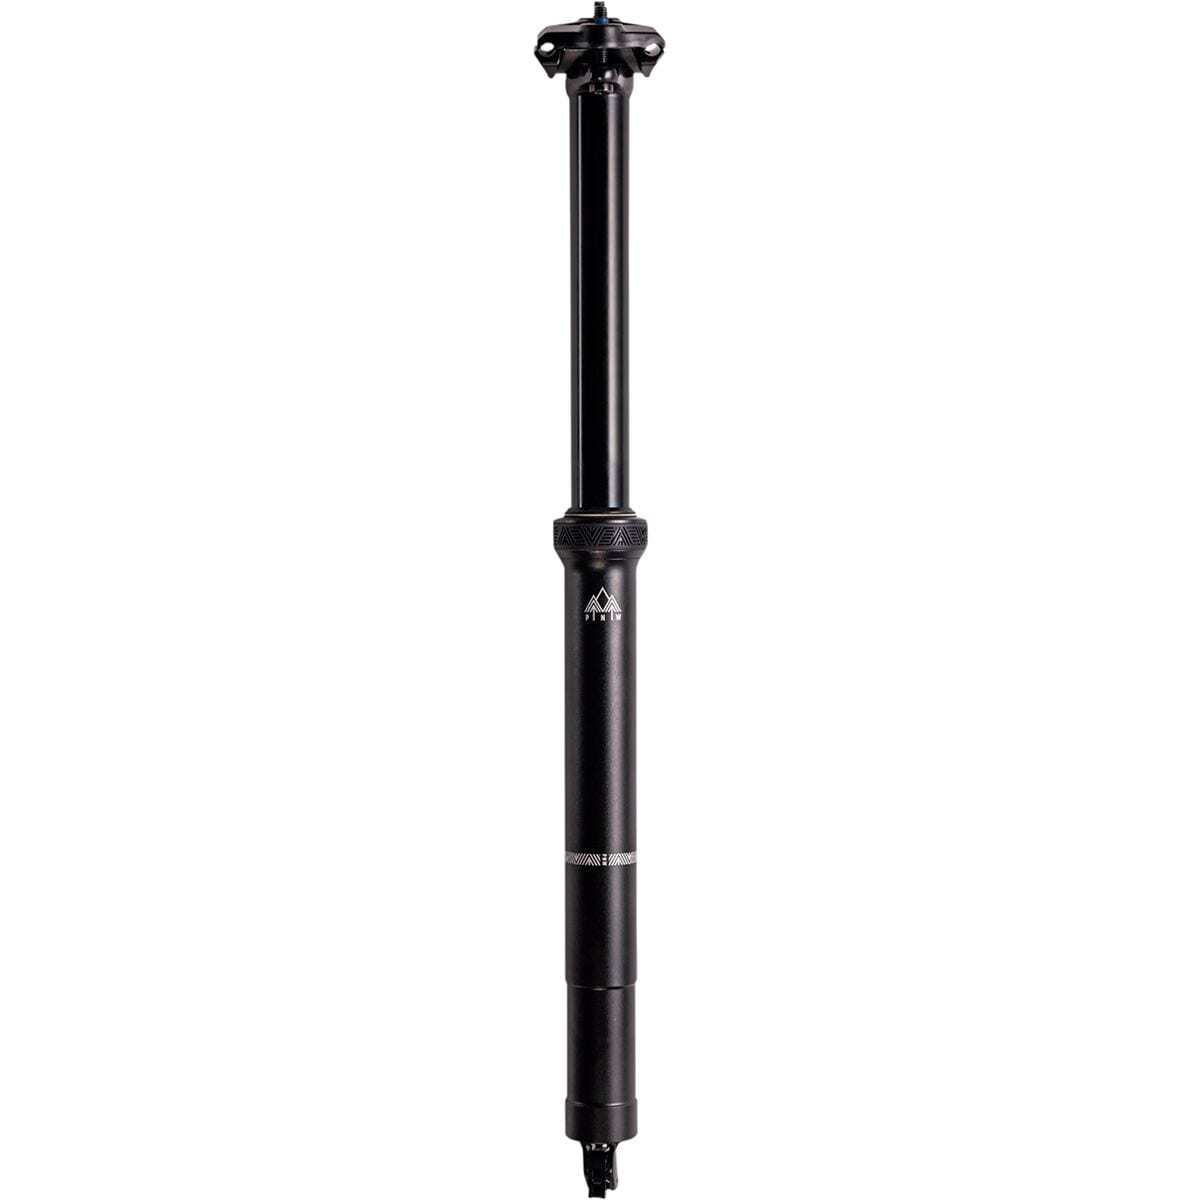 PNW Components Loam Dropper Seatpost Black, 30.9 x 125mm Travel